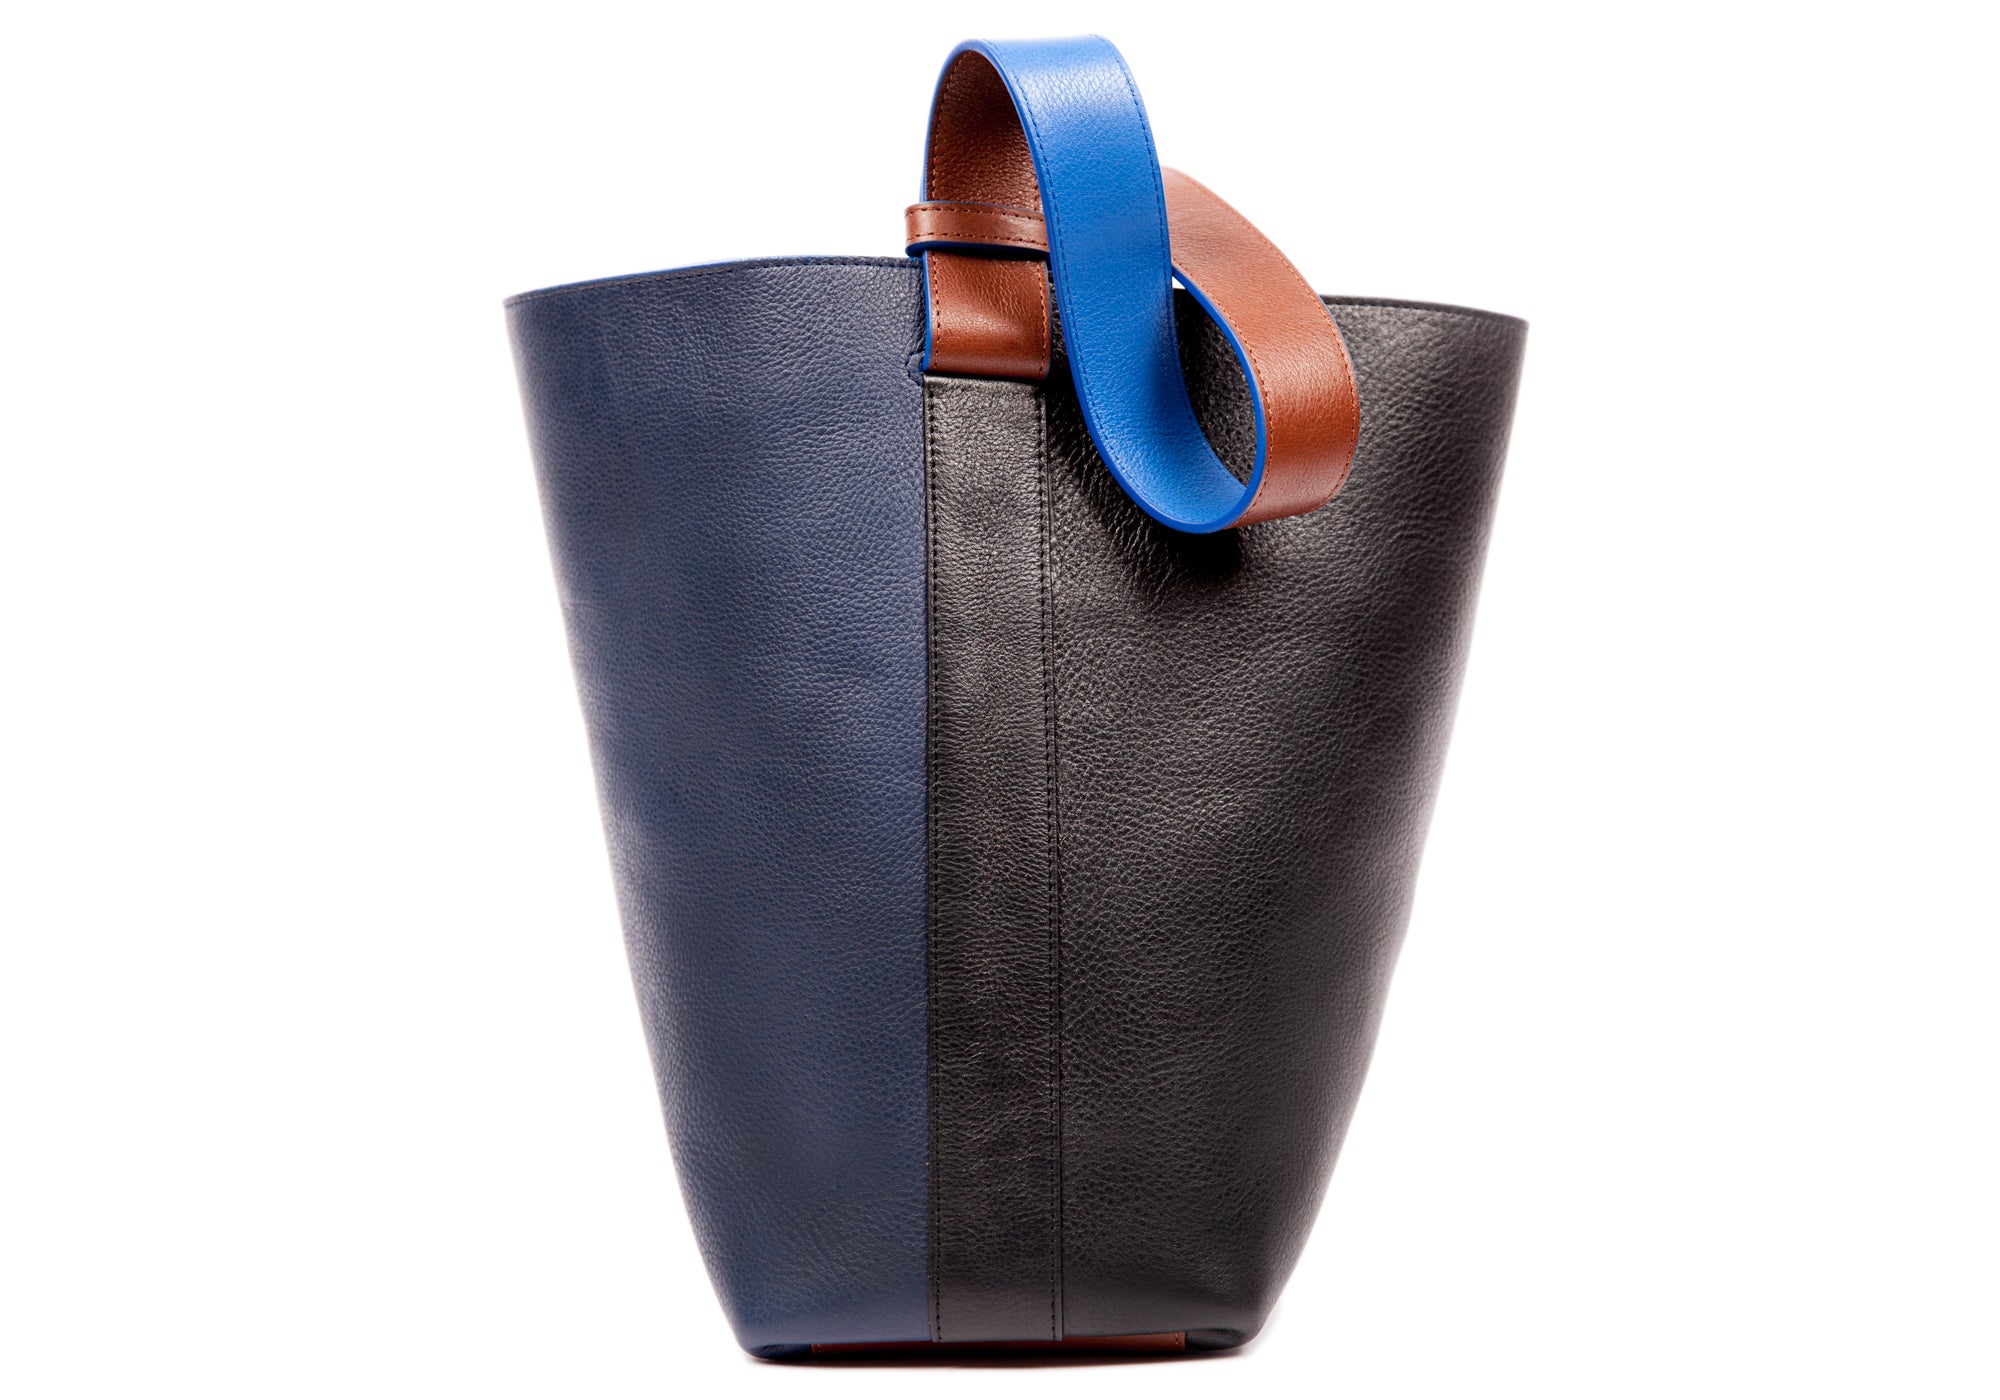 Celine Leather Bucket Bag